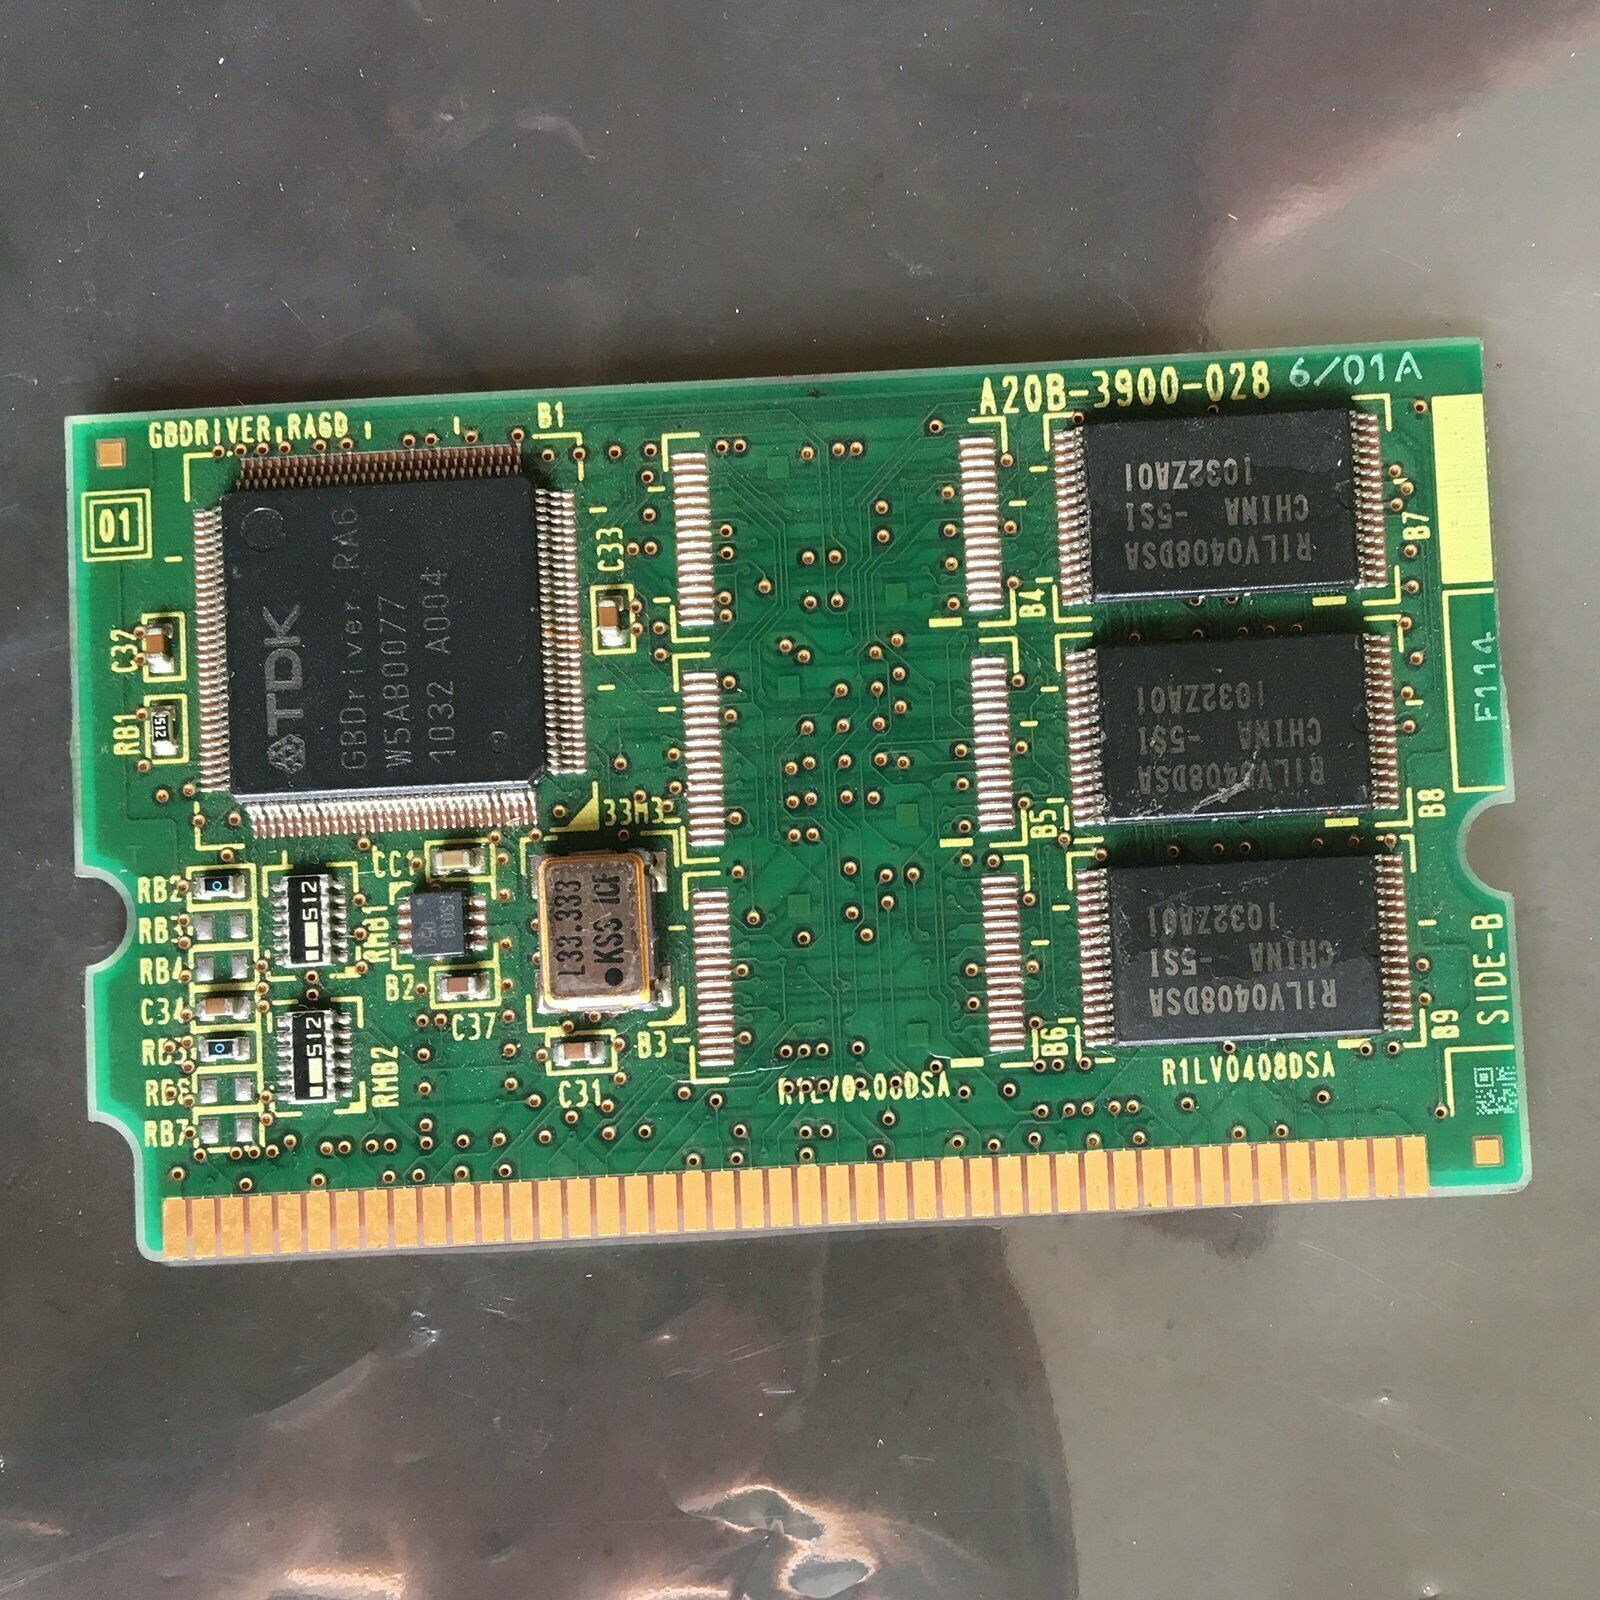 1PCS A20B-3900-0286 Used For Fanuc memory card 